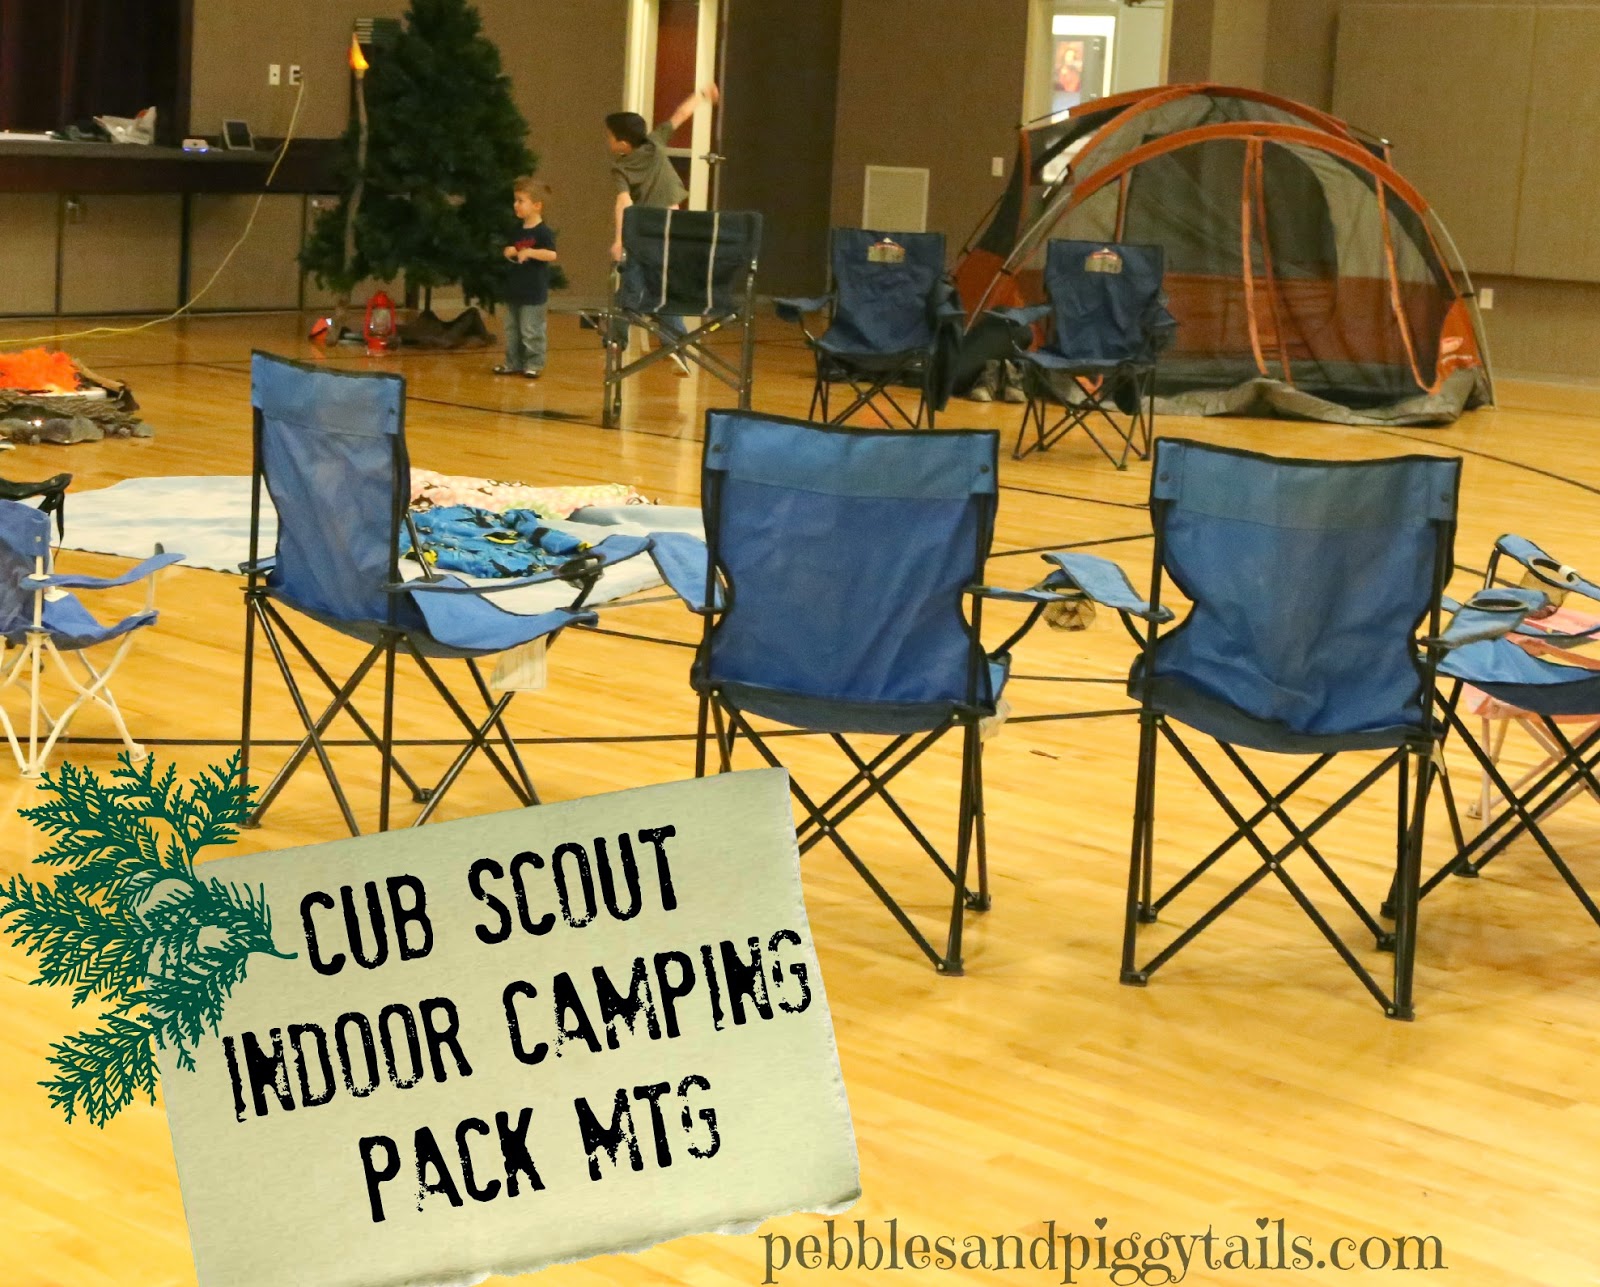 https://1.bp.blogspot.com/-VMLeTrZg7mA/UyiuI_wi7XI/AAAAAAAAB6A/oRLsJuLYUTU/s1600/cub-scout-camping1.jpg